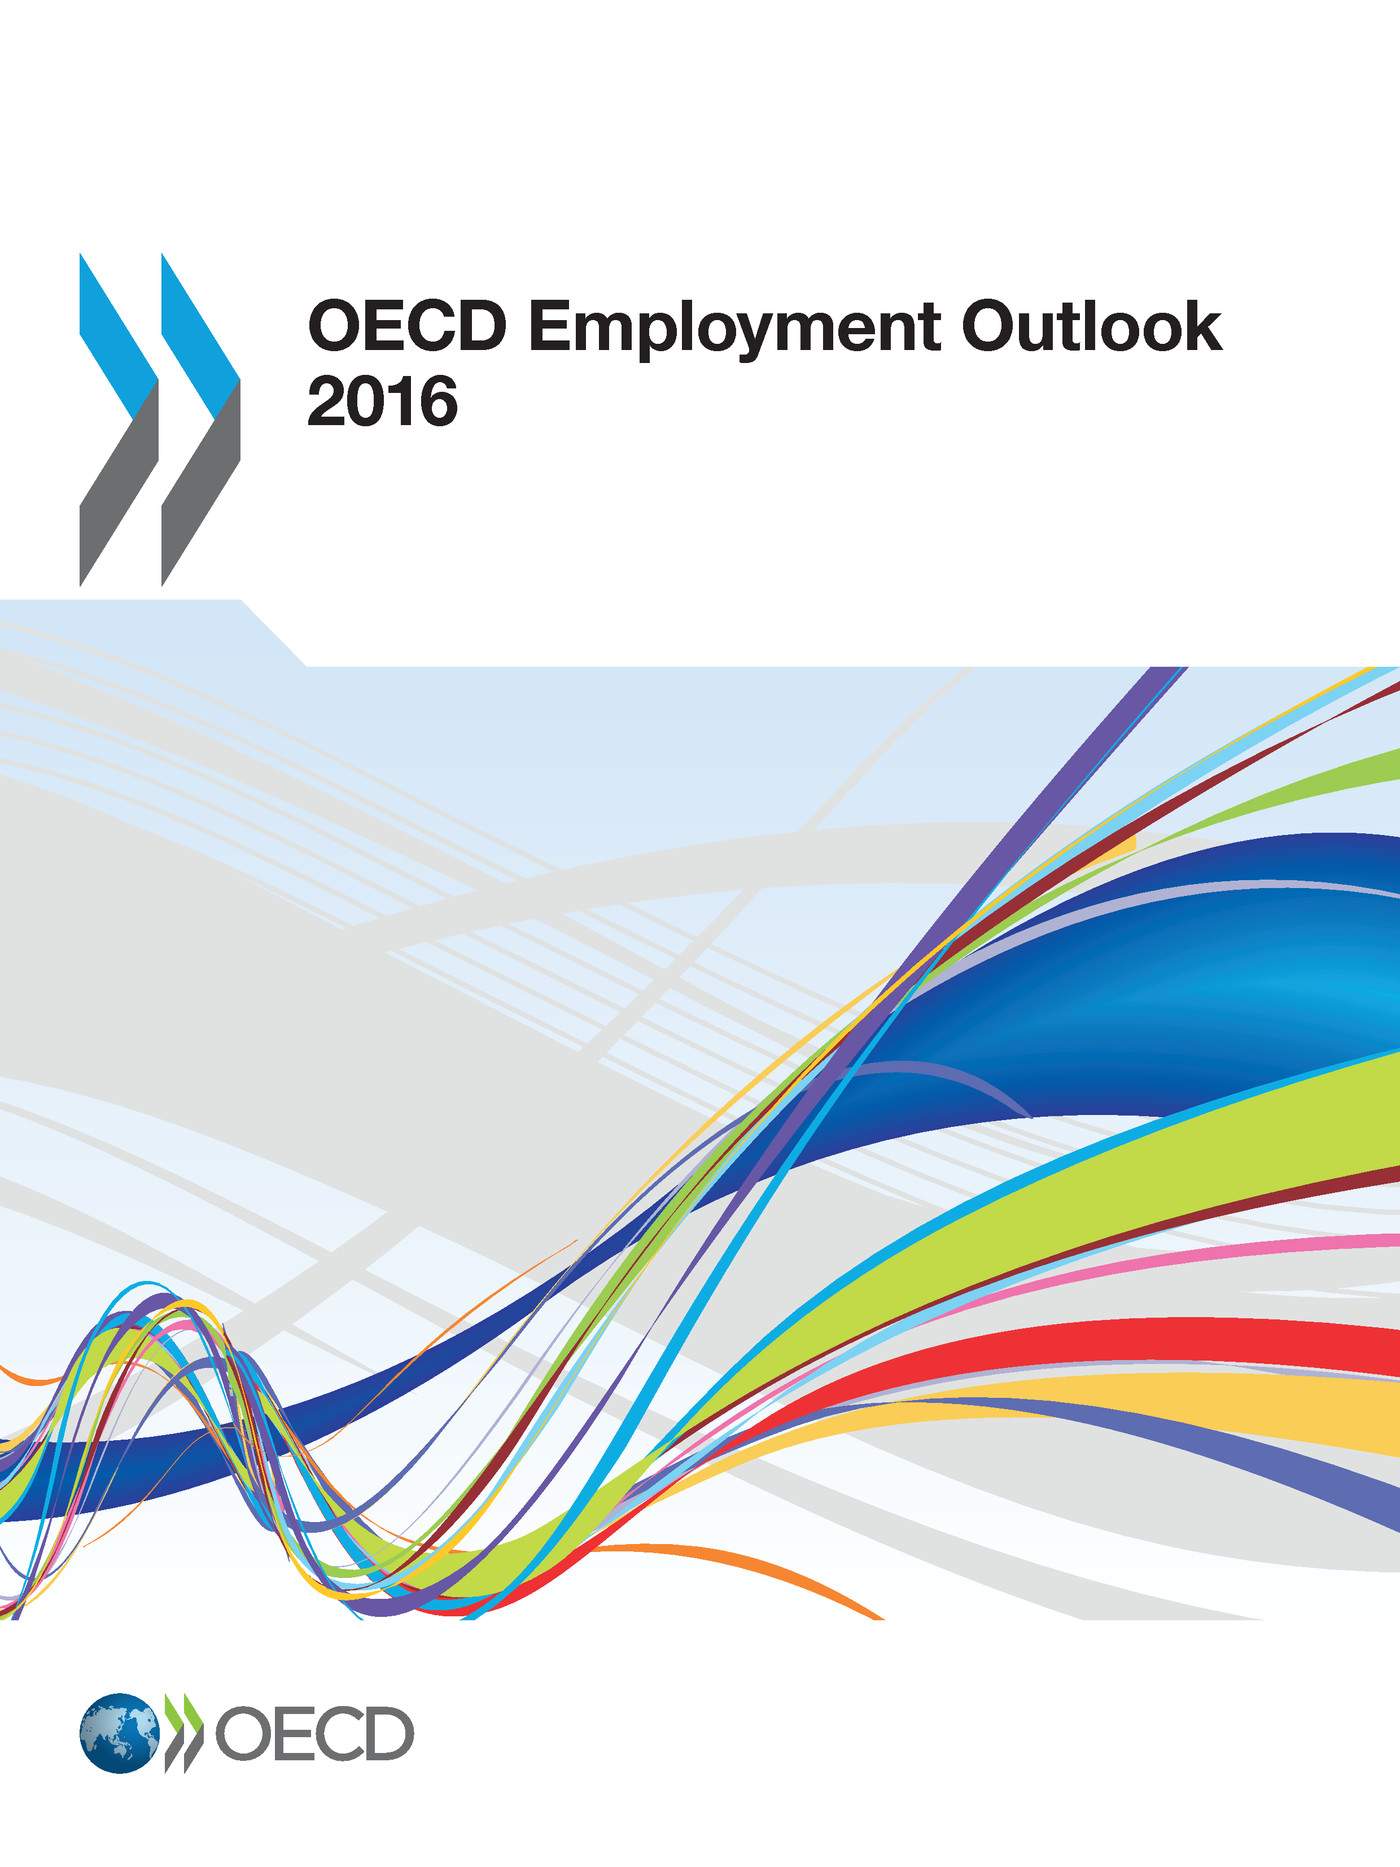 OECD Employment Outlook 2016 -  Collectif - OCDE / OECD